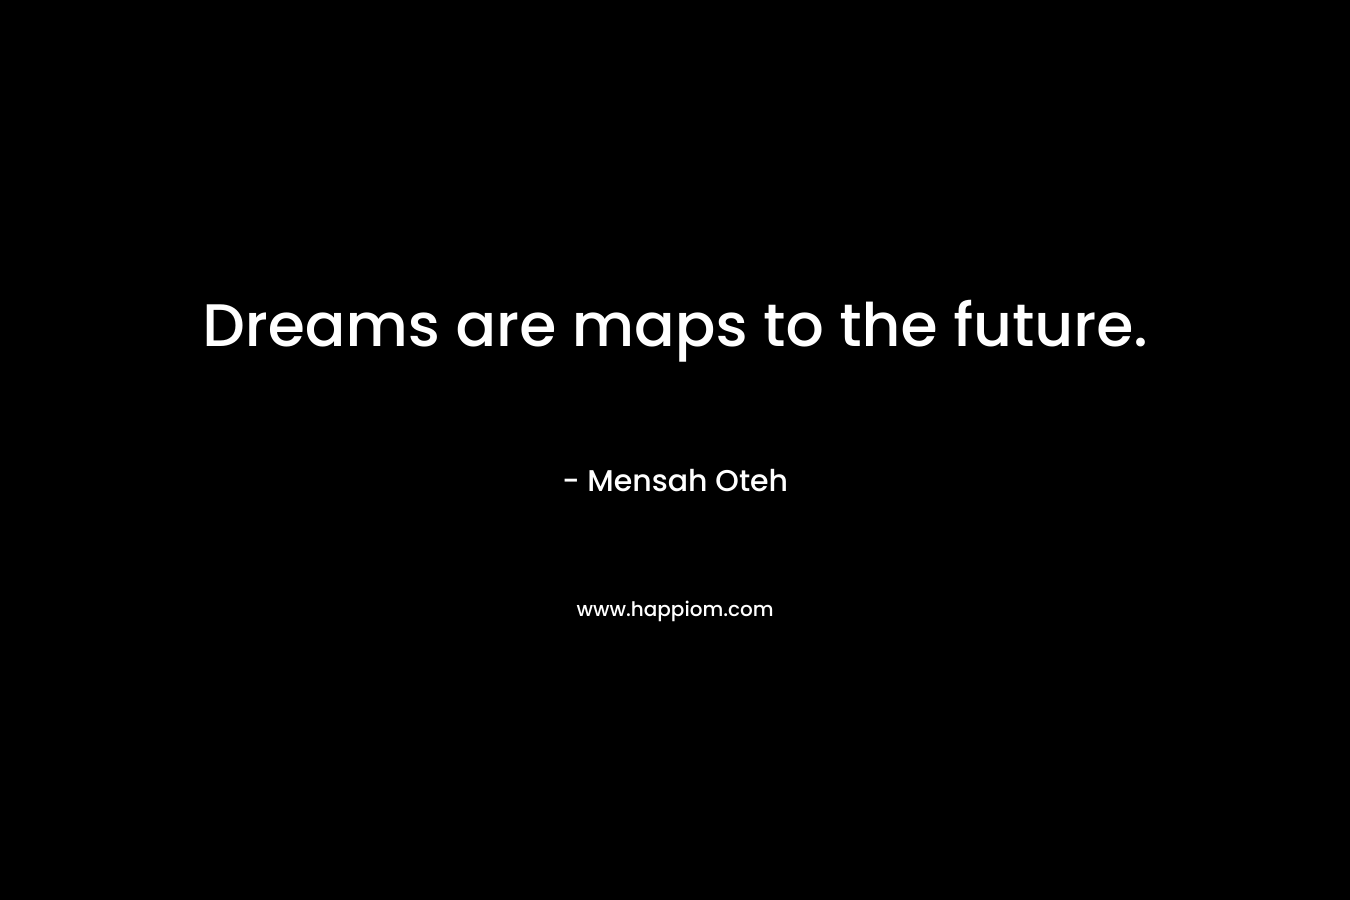 Dreams are maps to the future.